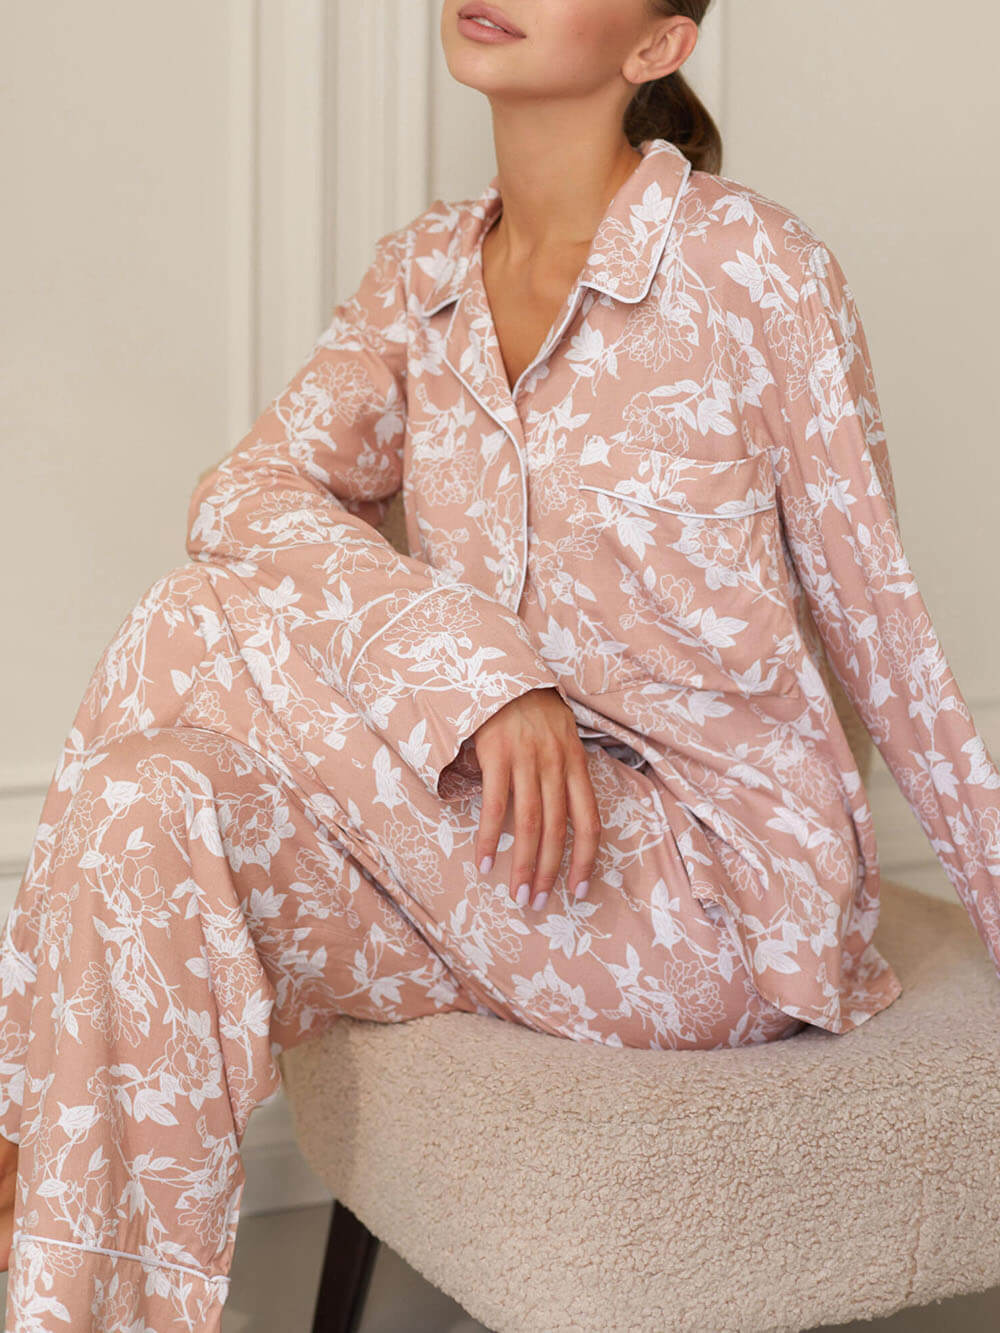 Lockeres Pyjama-Set mit Blumendruck